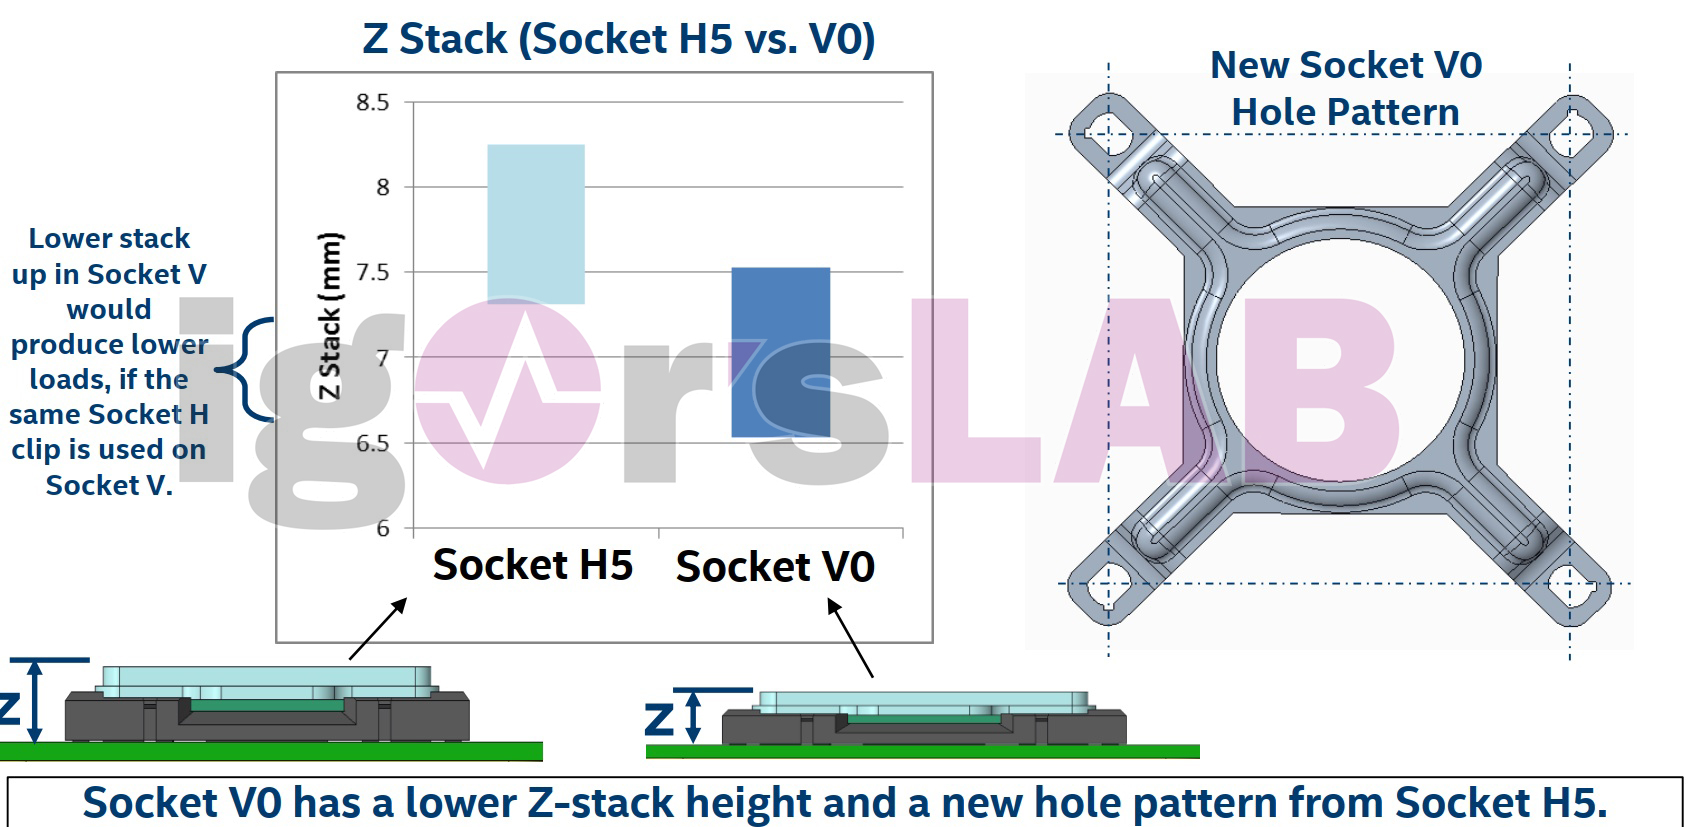 Intel's LGA CPU Sockets Explained